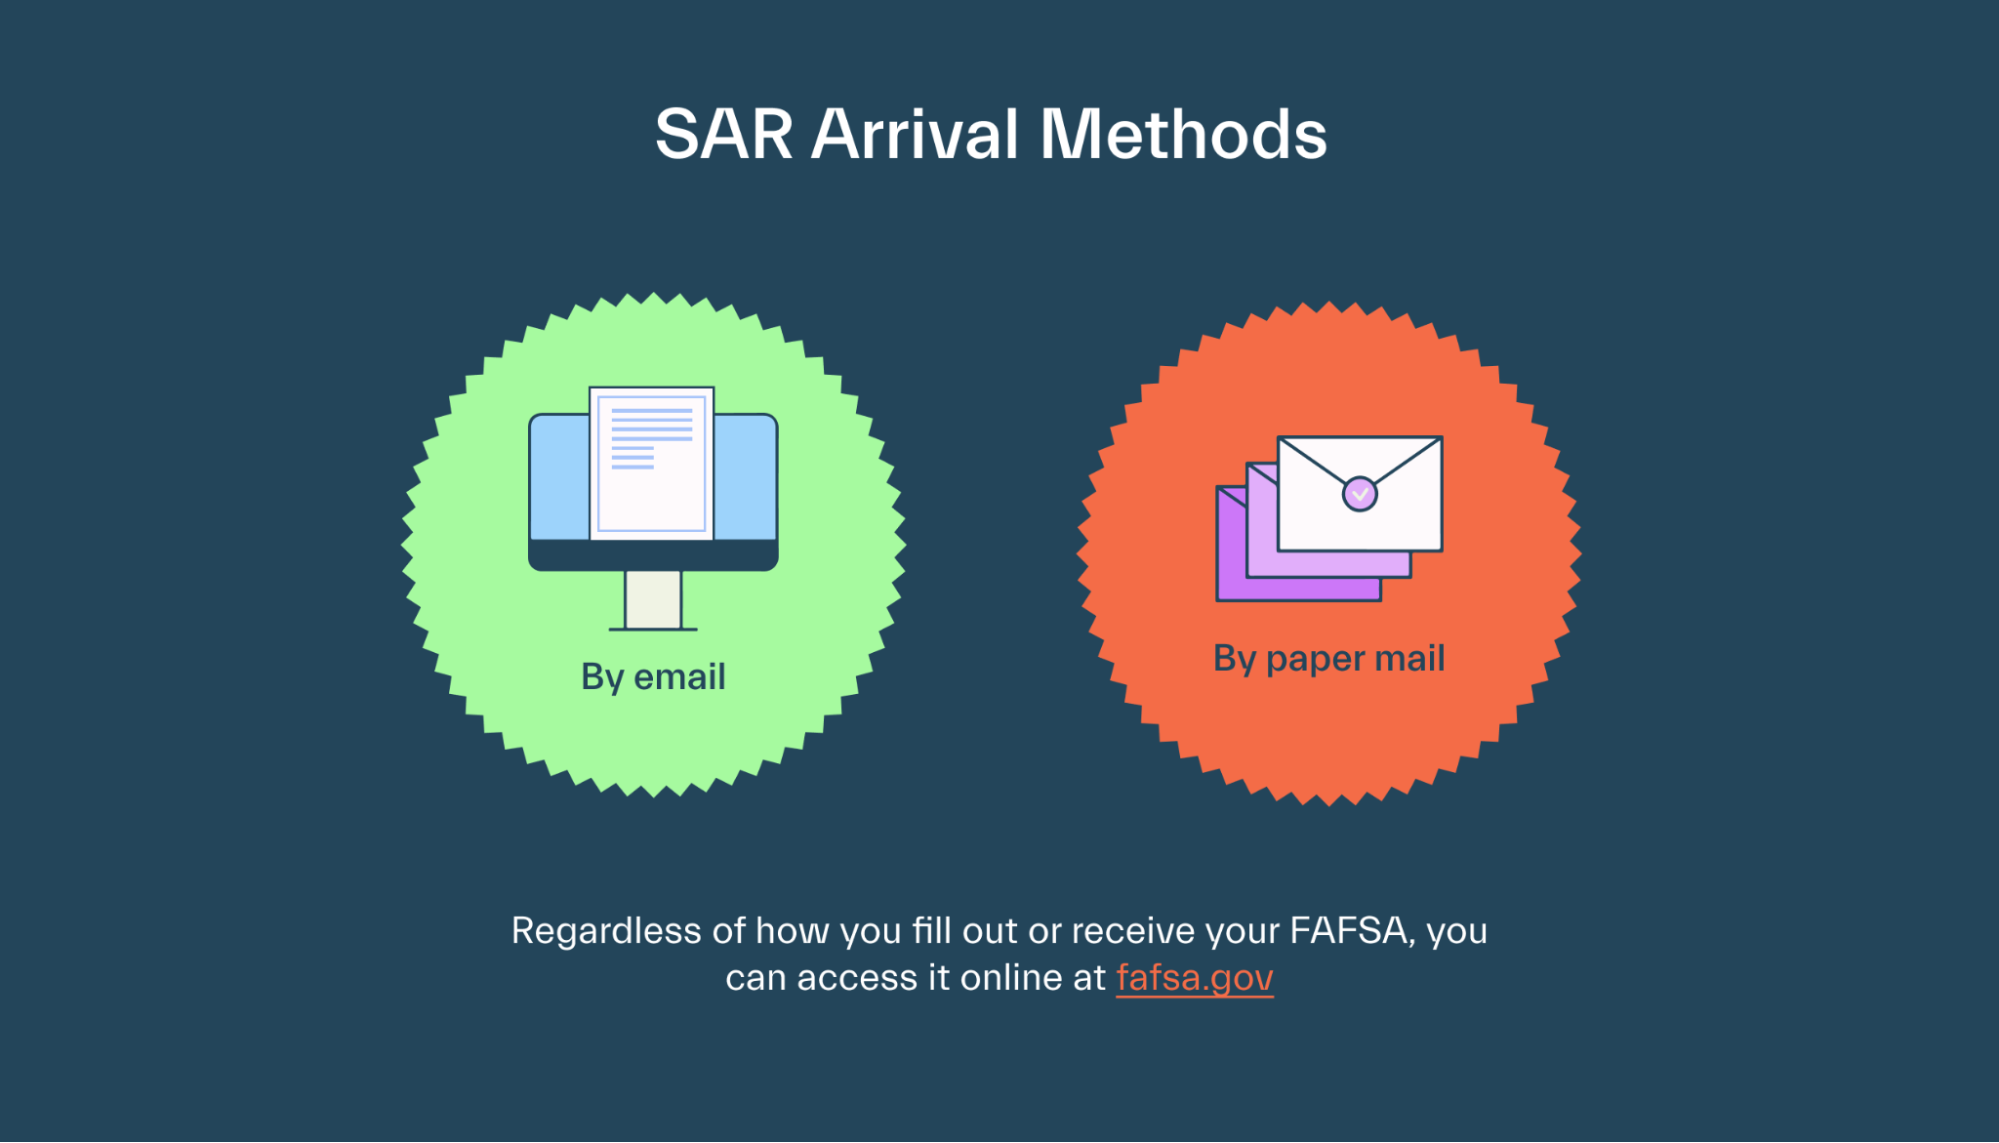 SAR arrival methods